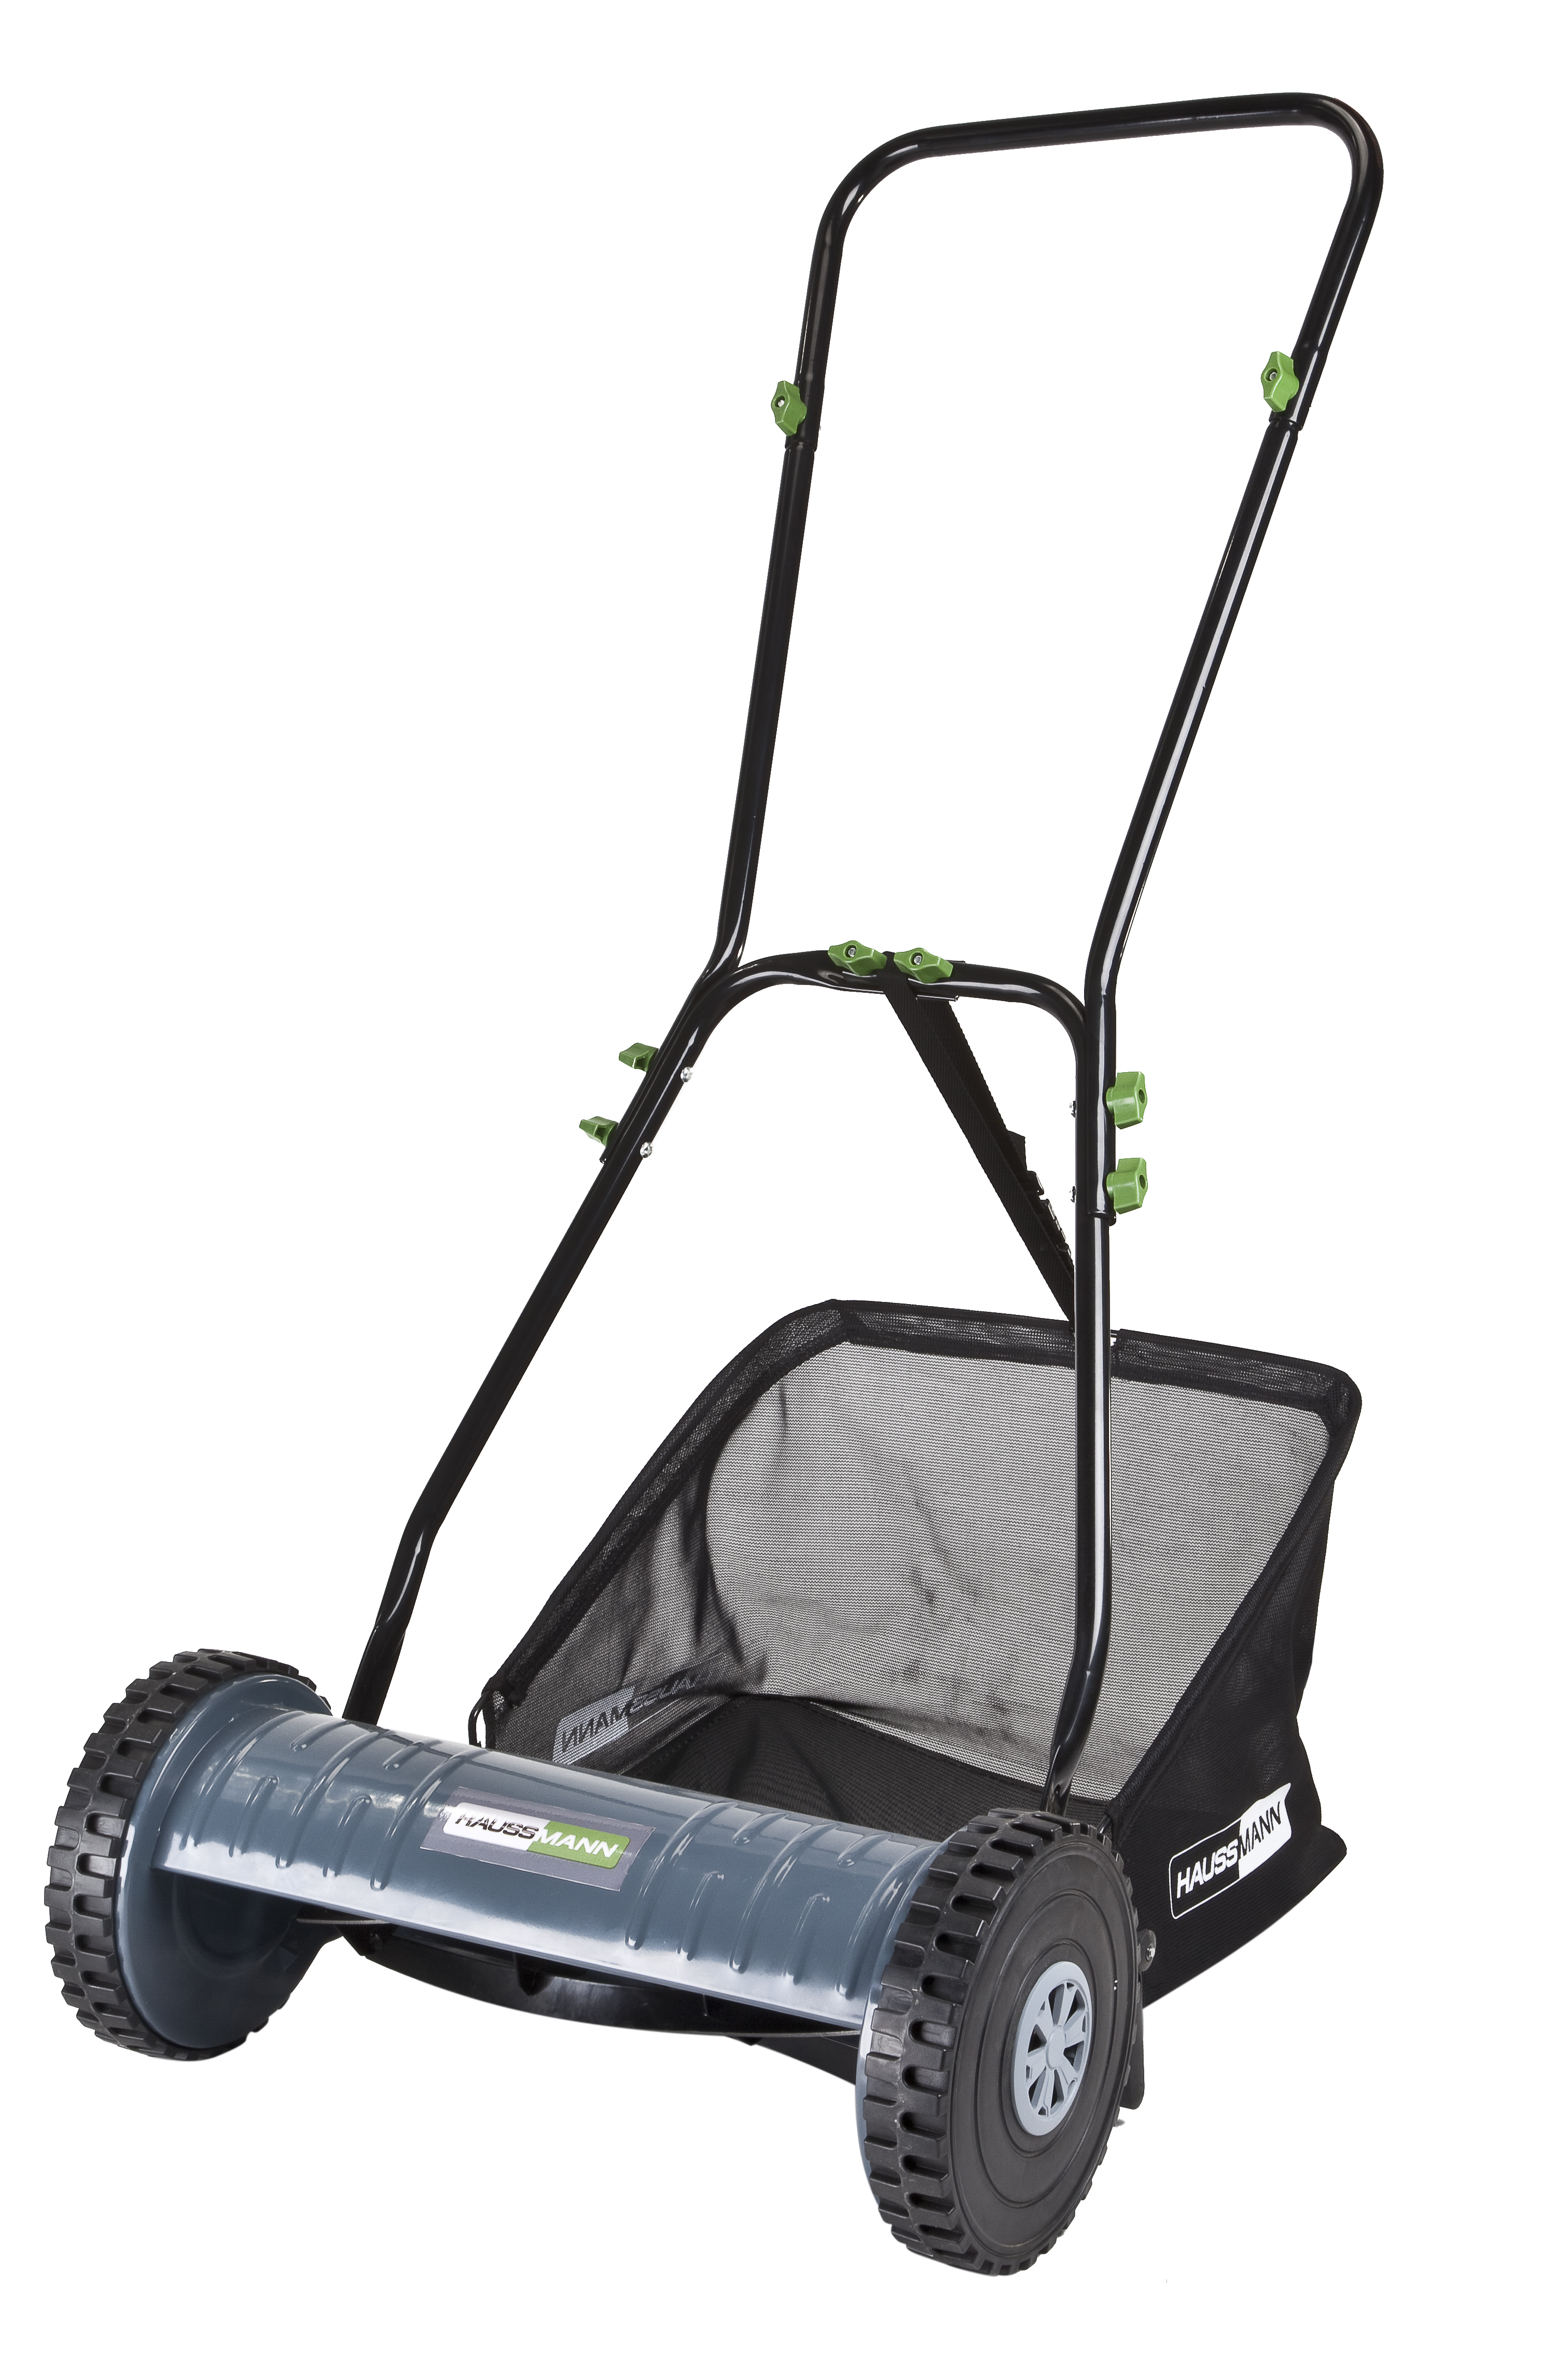 Pro Concept Lawn Mower Manual